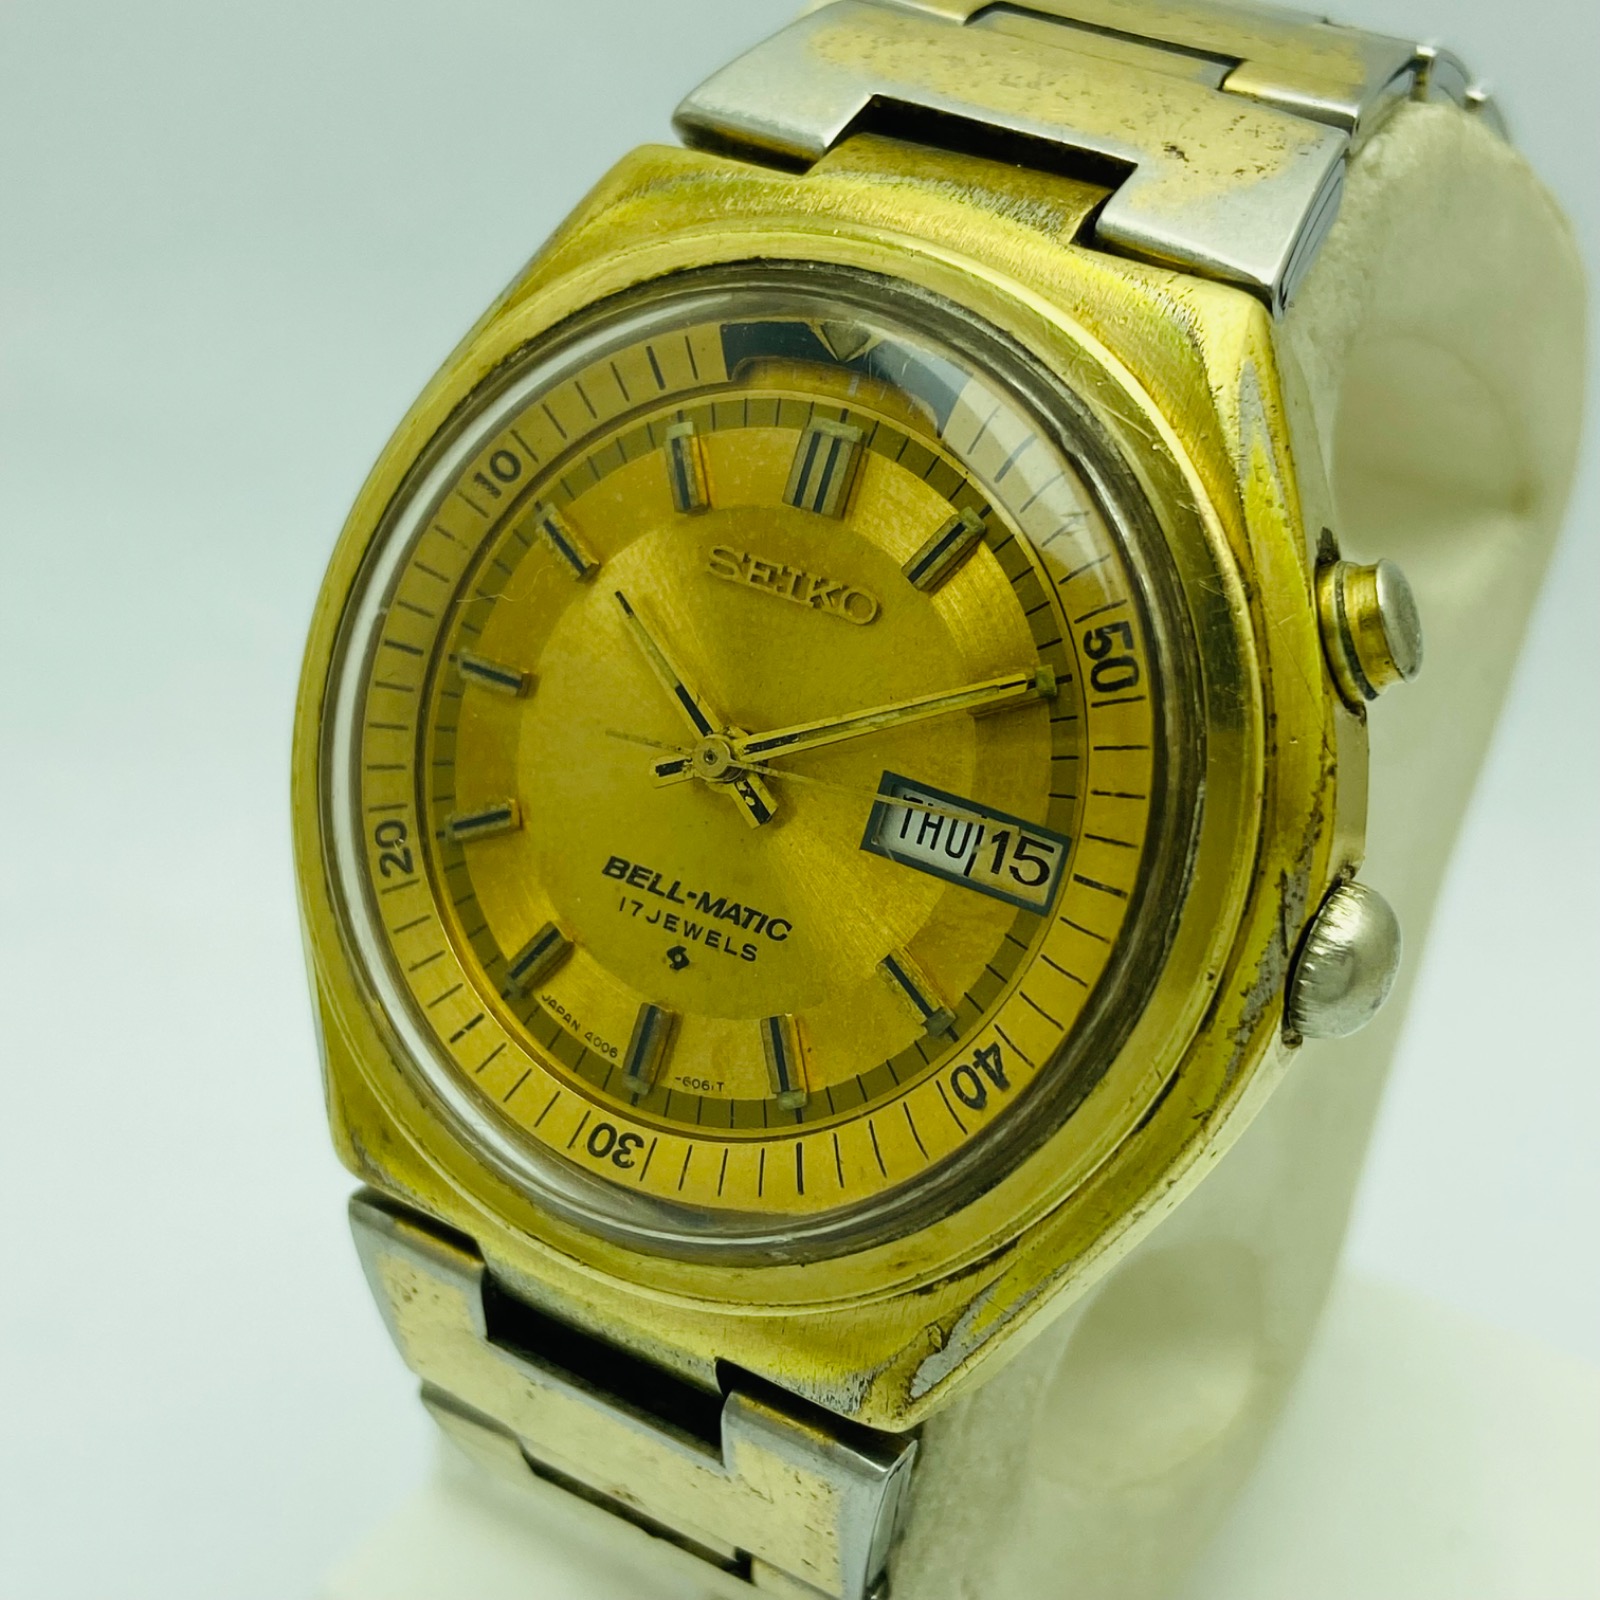 Seiko Bellmatic 4006-6040 Automatic Vintage Men’s Watch (1)